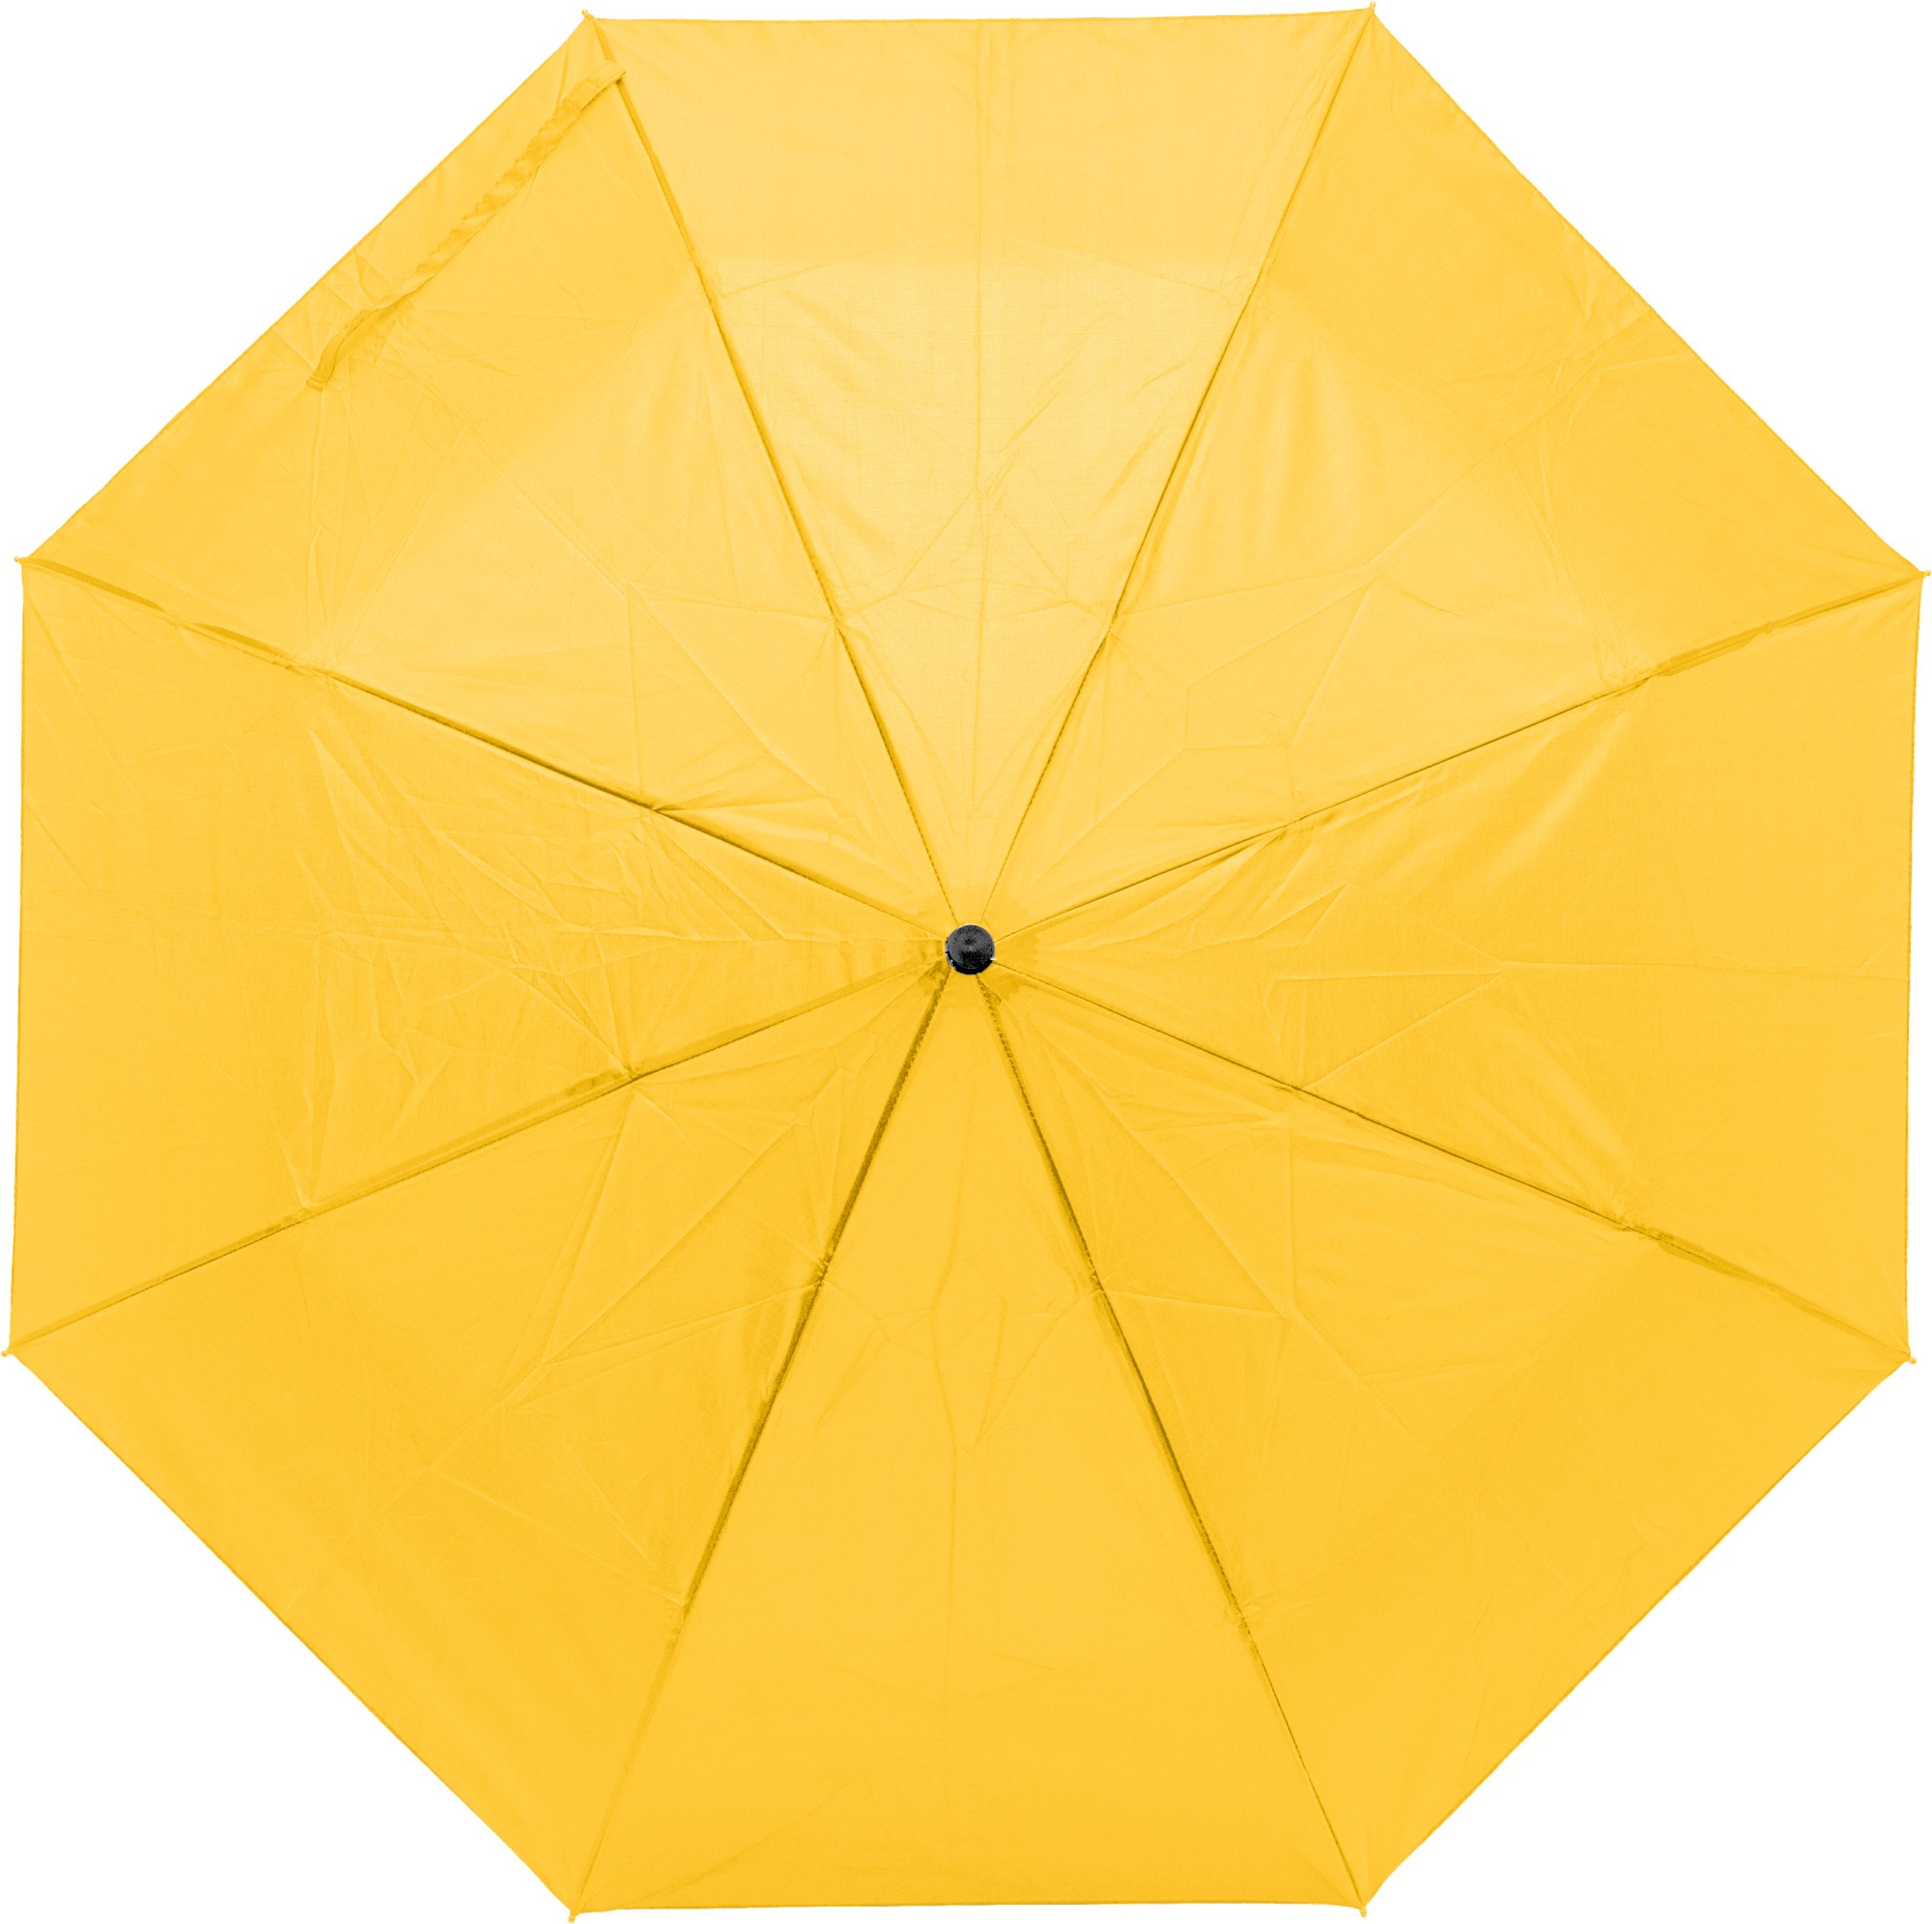 009258 006999999 2d090 top pro01 fal - Umbrella with Shopping Bag